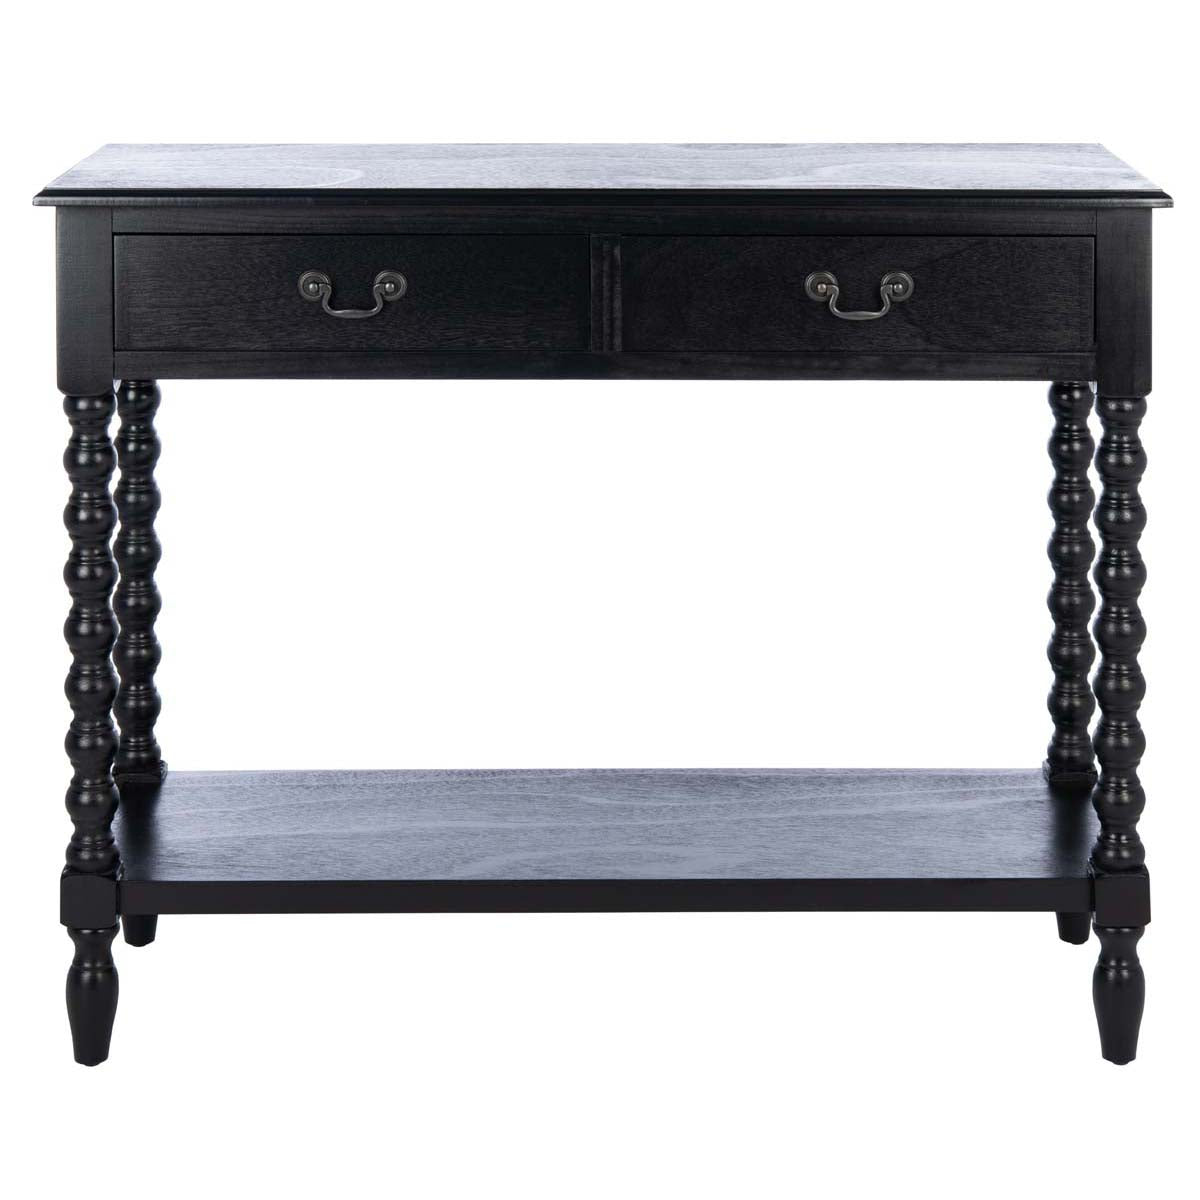 Safavieh Athena 2 Drawer Console Table, CNS5702 - Black